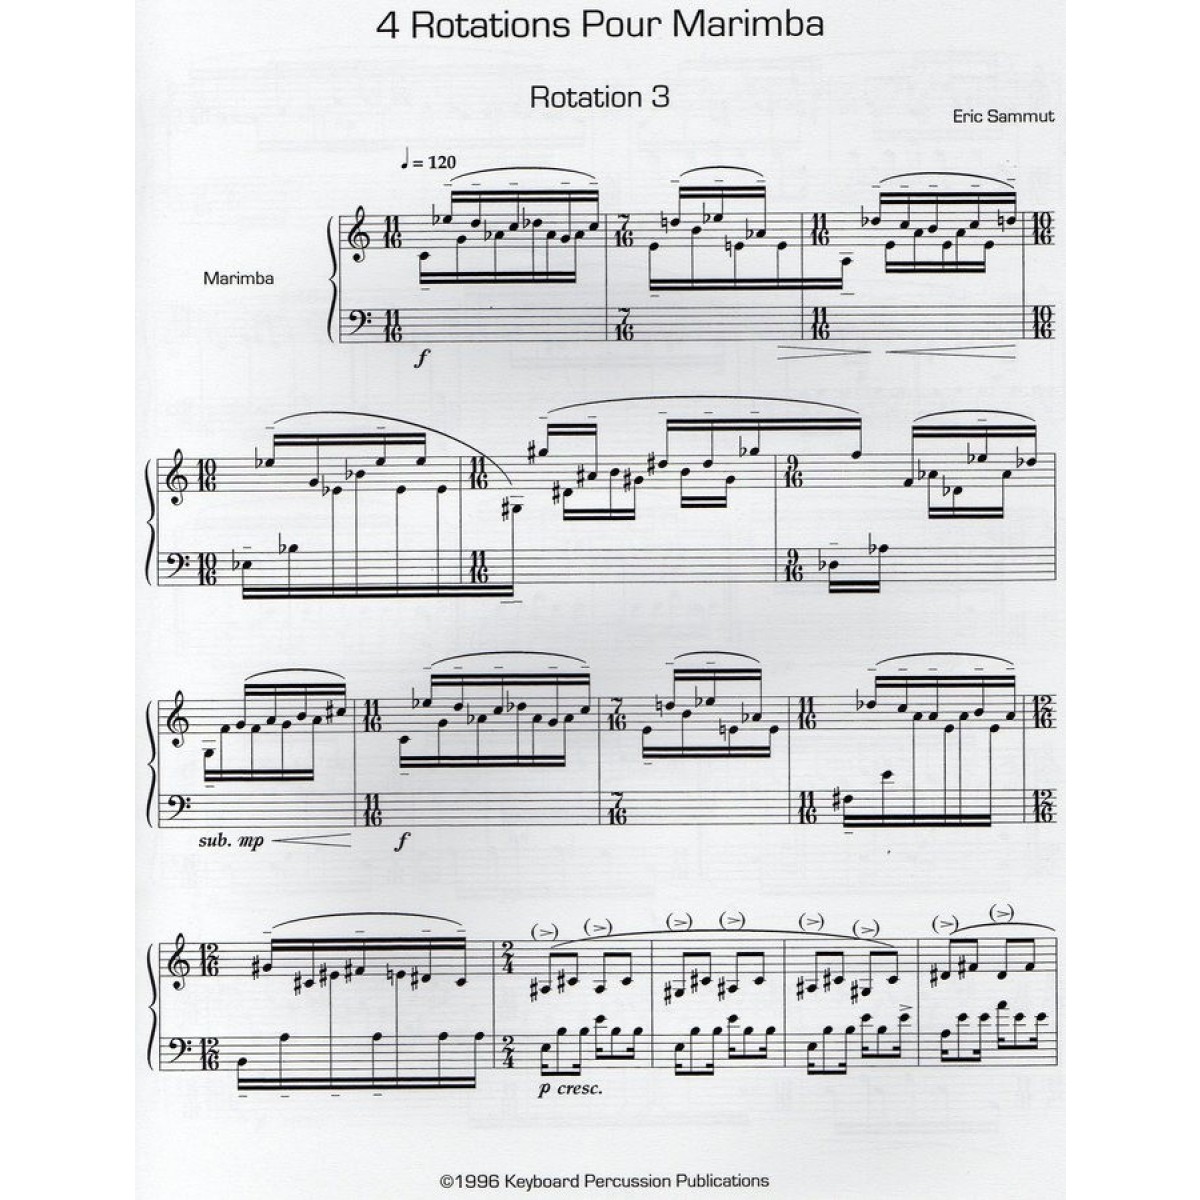 Four Rotations For Marimba III by Eric Sammut